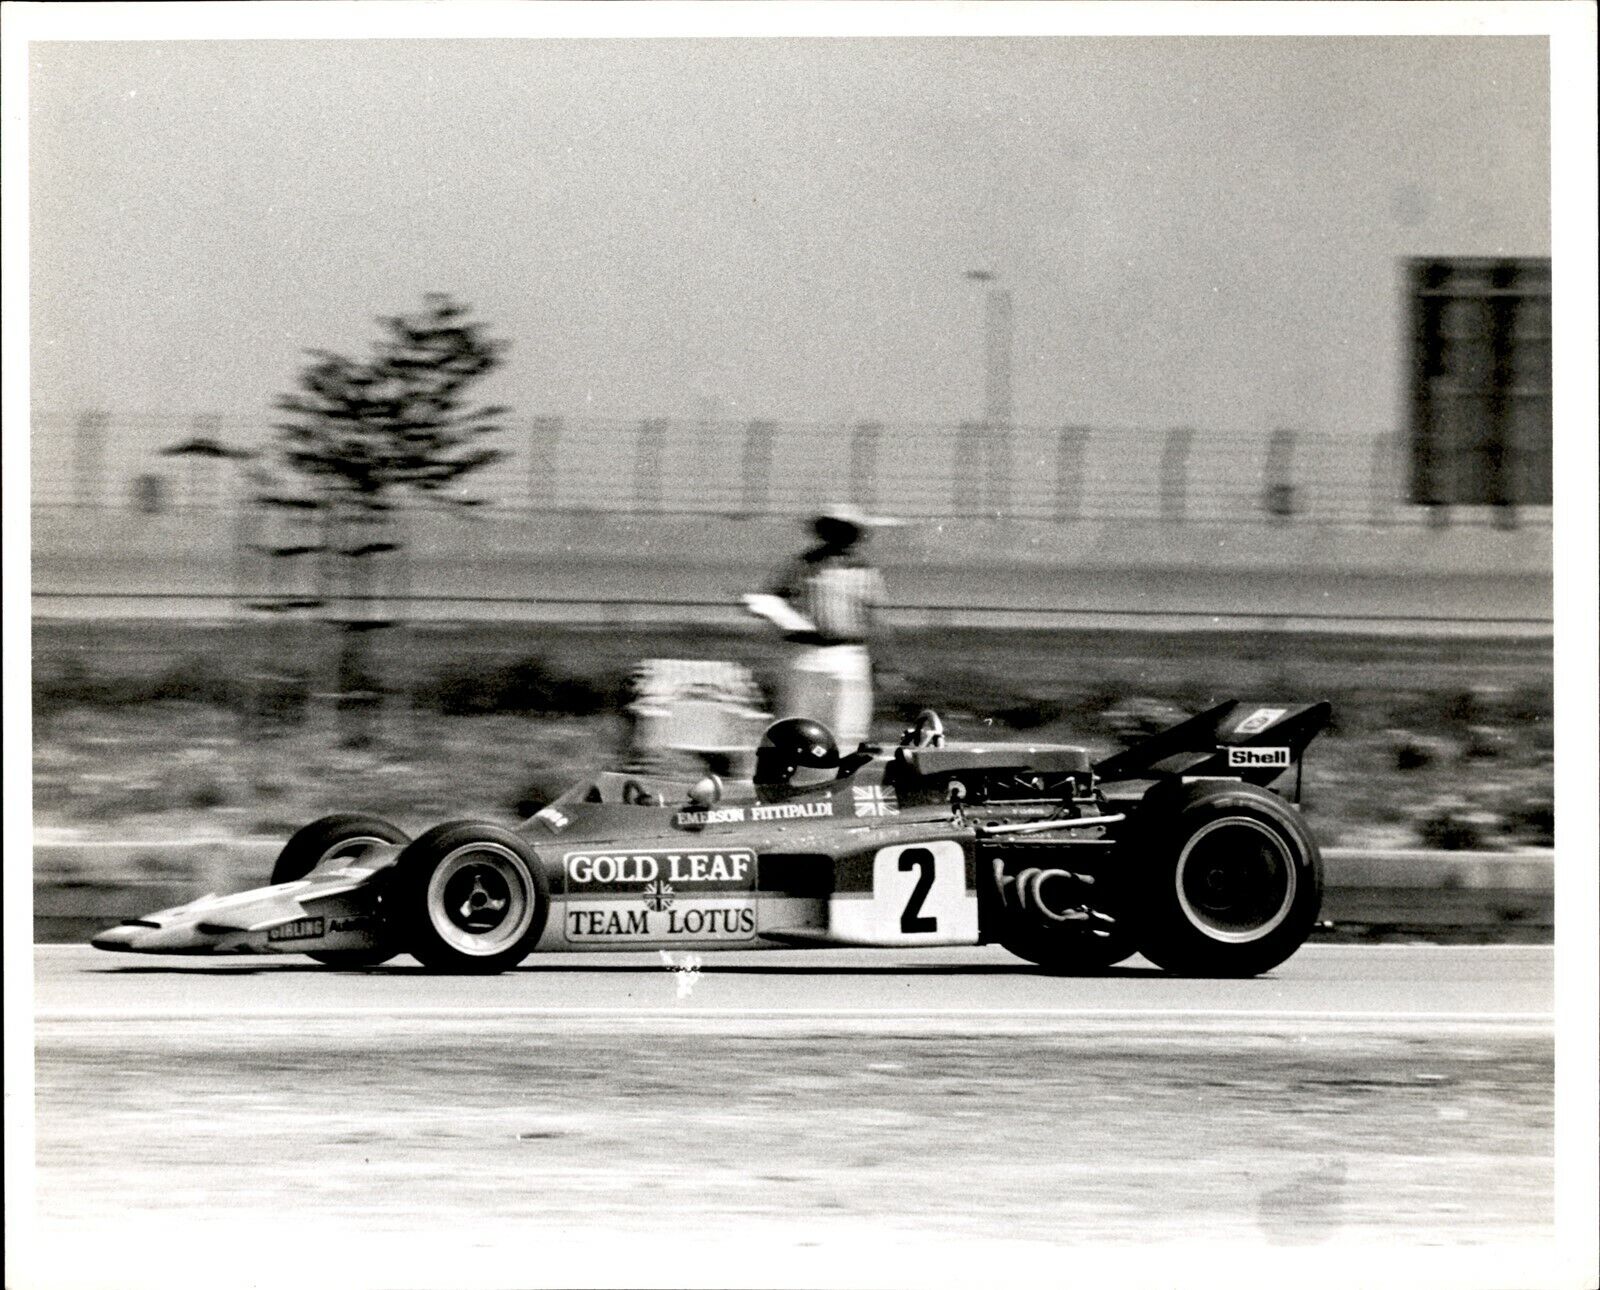 JT10 '69 Original Rick Strome Photo EMERSON FITTIPALDI #2 TEAM LOTUS RACE CAR